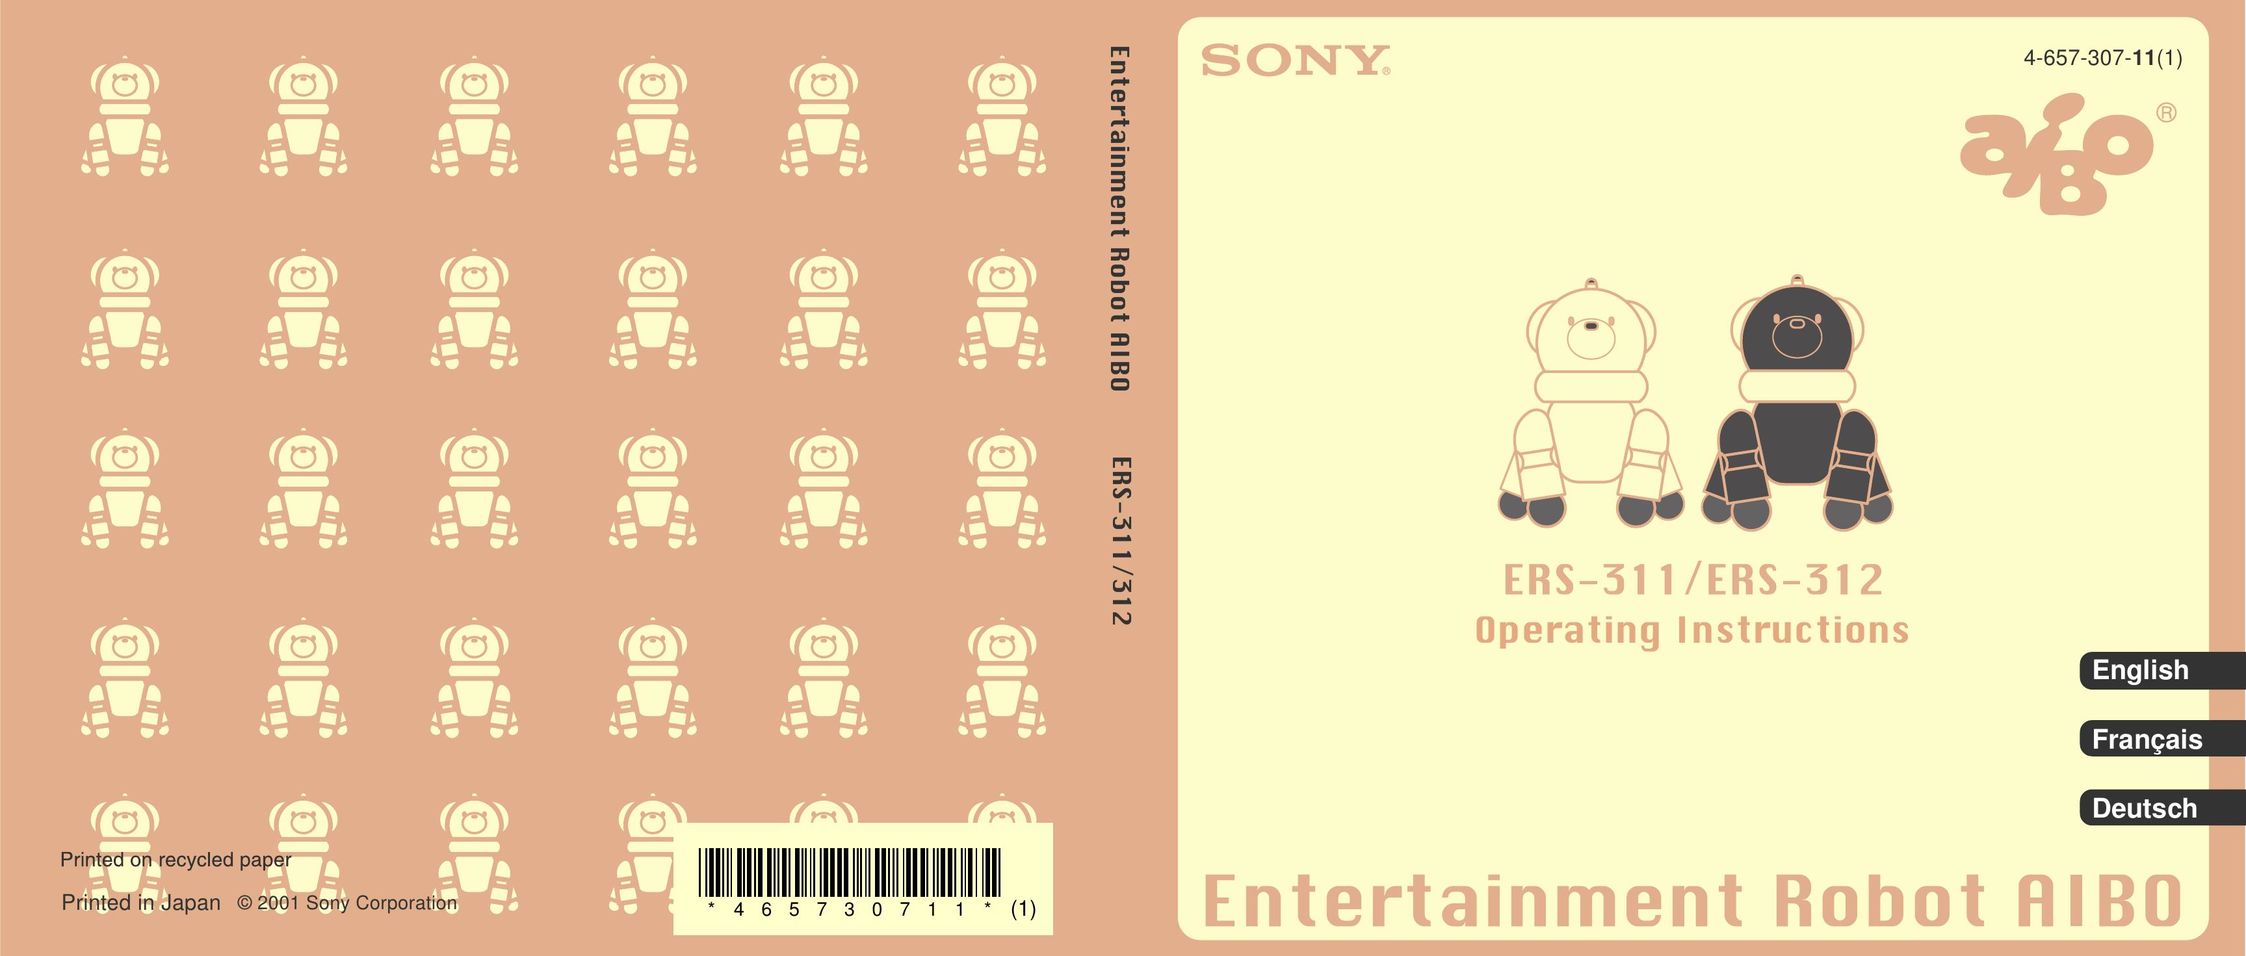 Sony ERS-312 Robotics User Manual